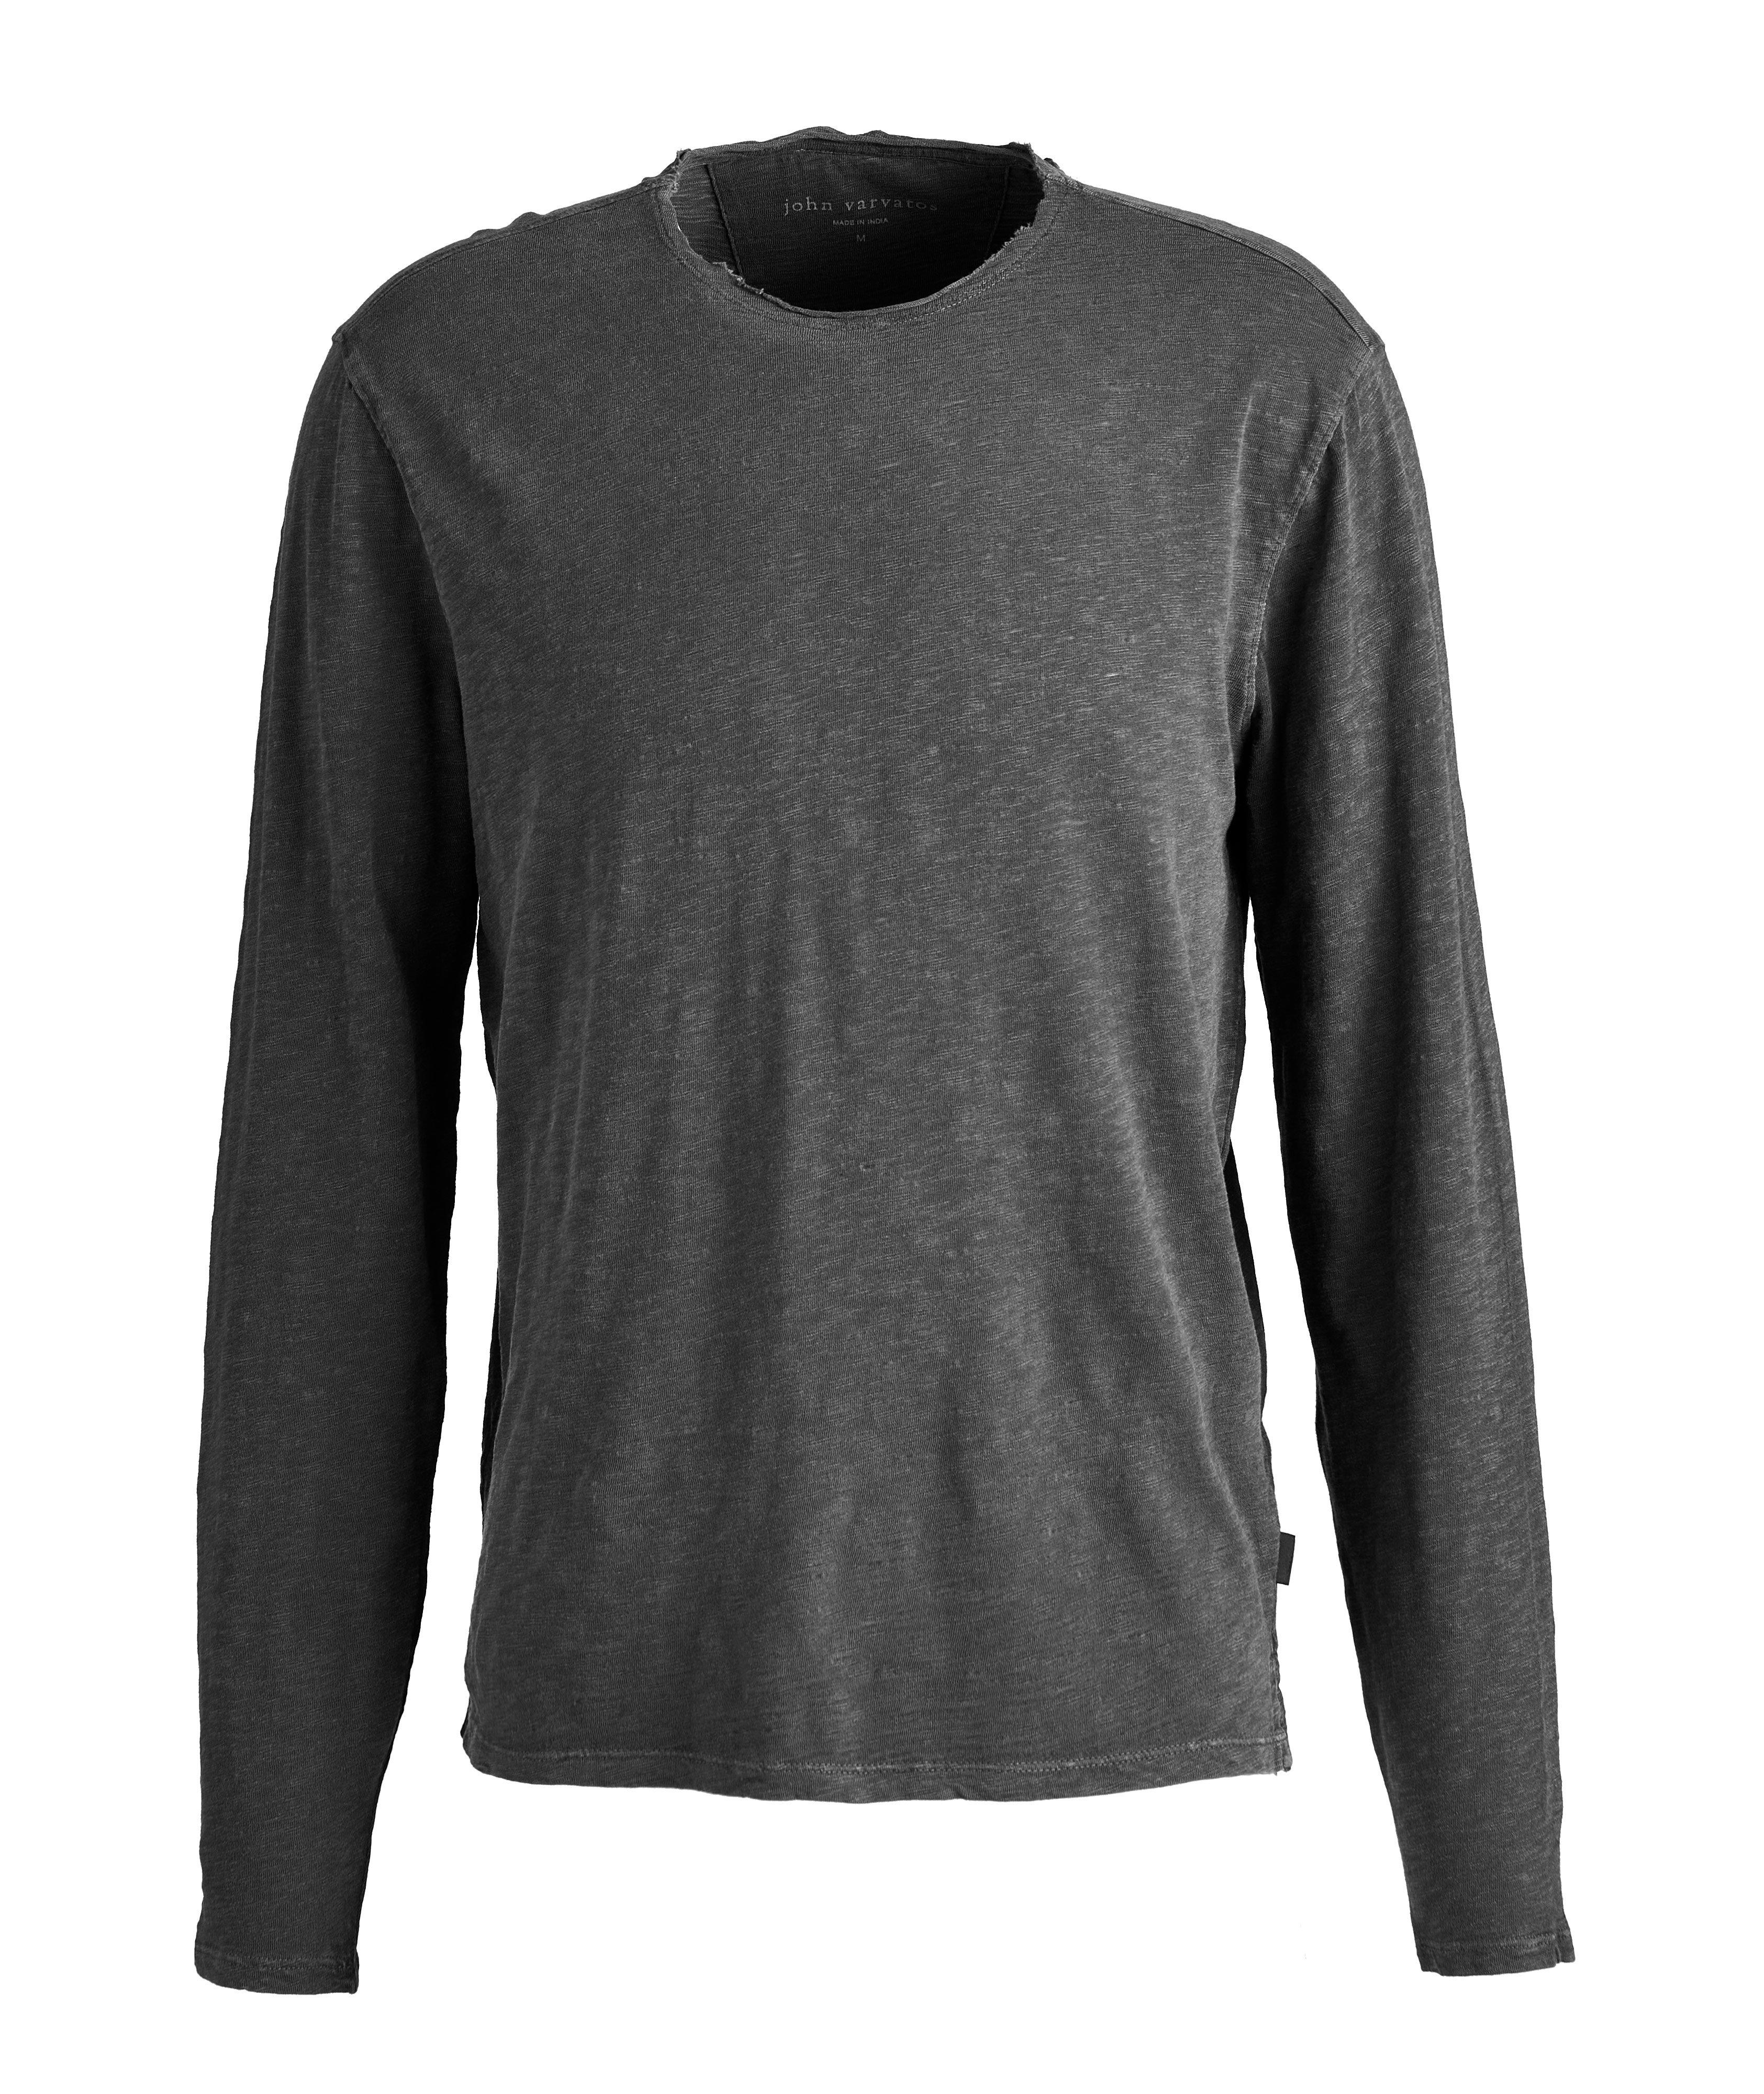 Raw Edge Garment Dyed Slub Cotton Crew Neck Sweater image 0